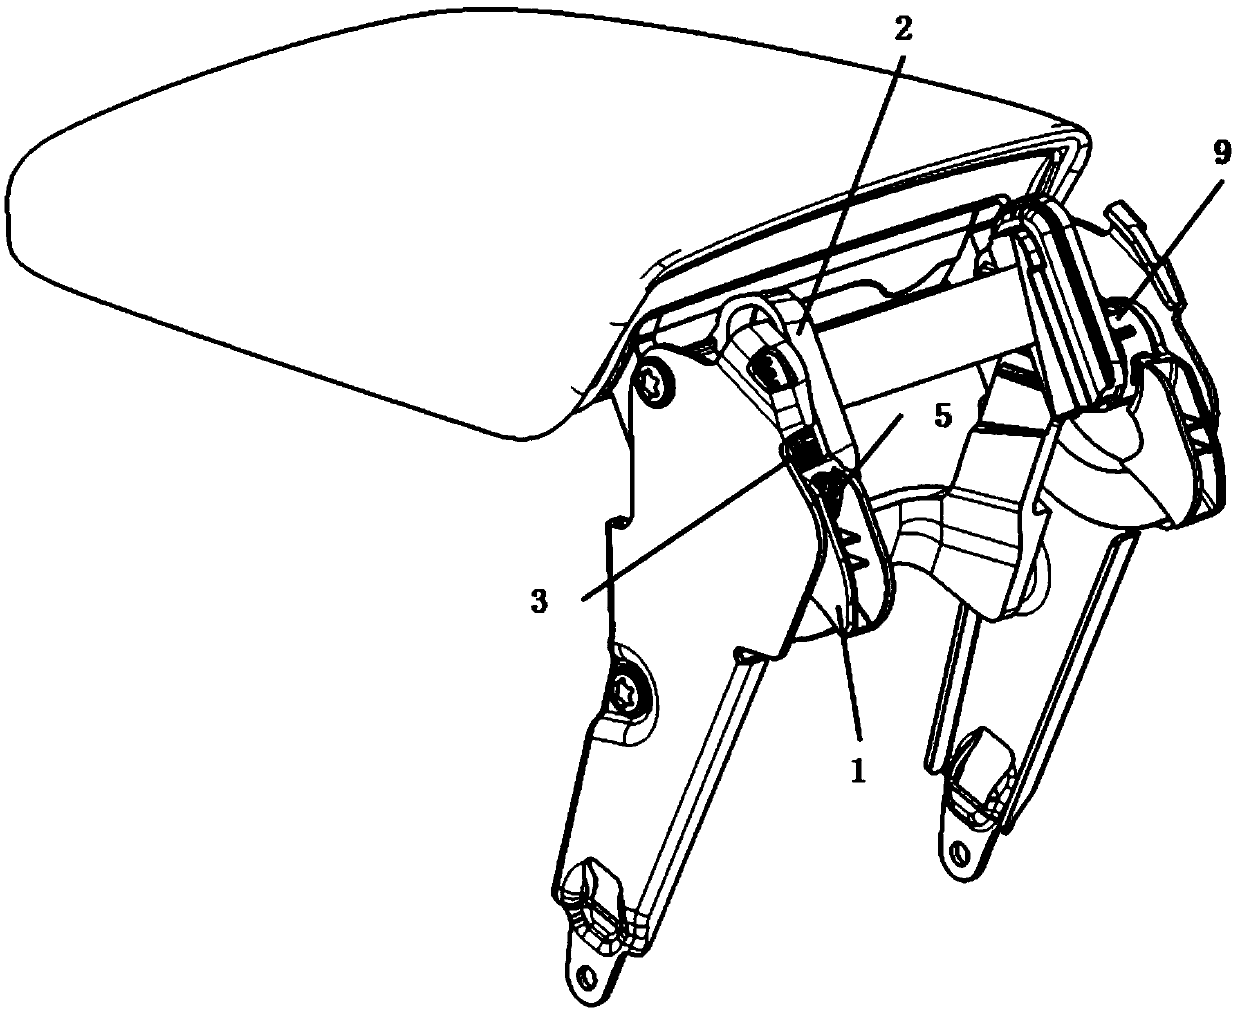 Sliding rotating shaft mechanism and armrest box armrest